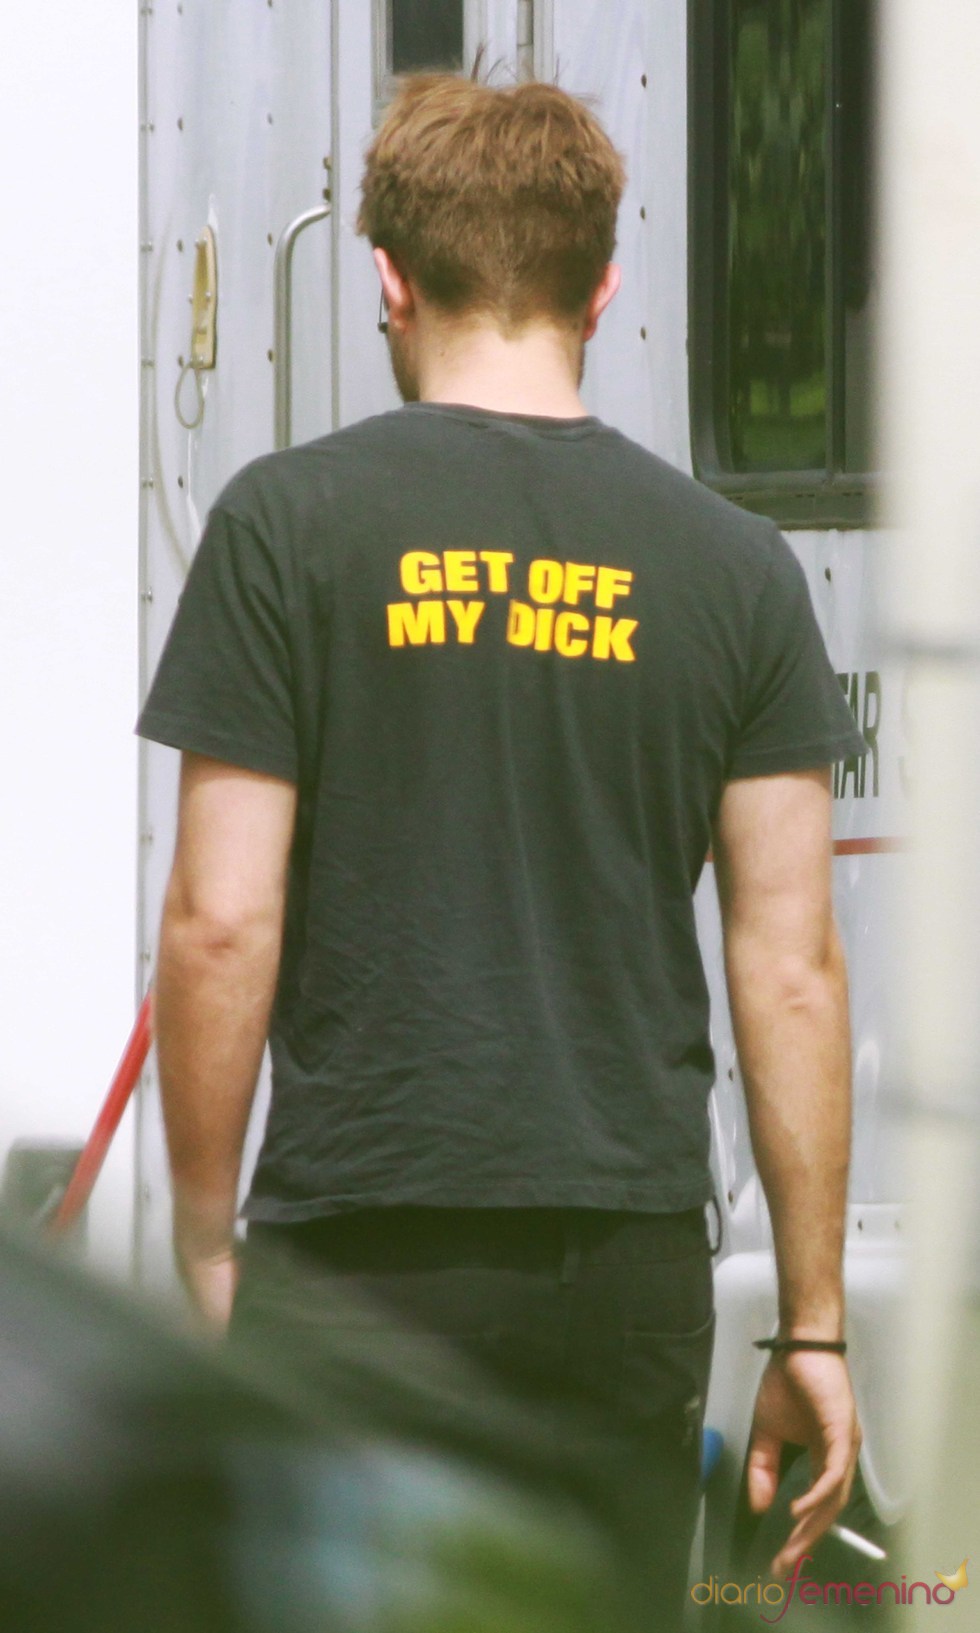 La camiseta obscena de Robert Pattinson